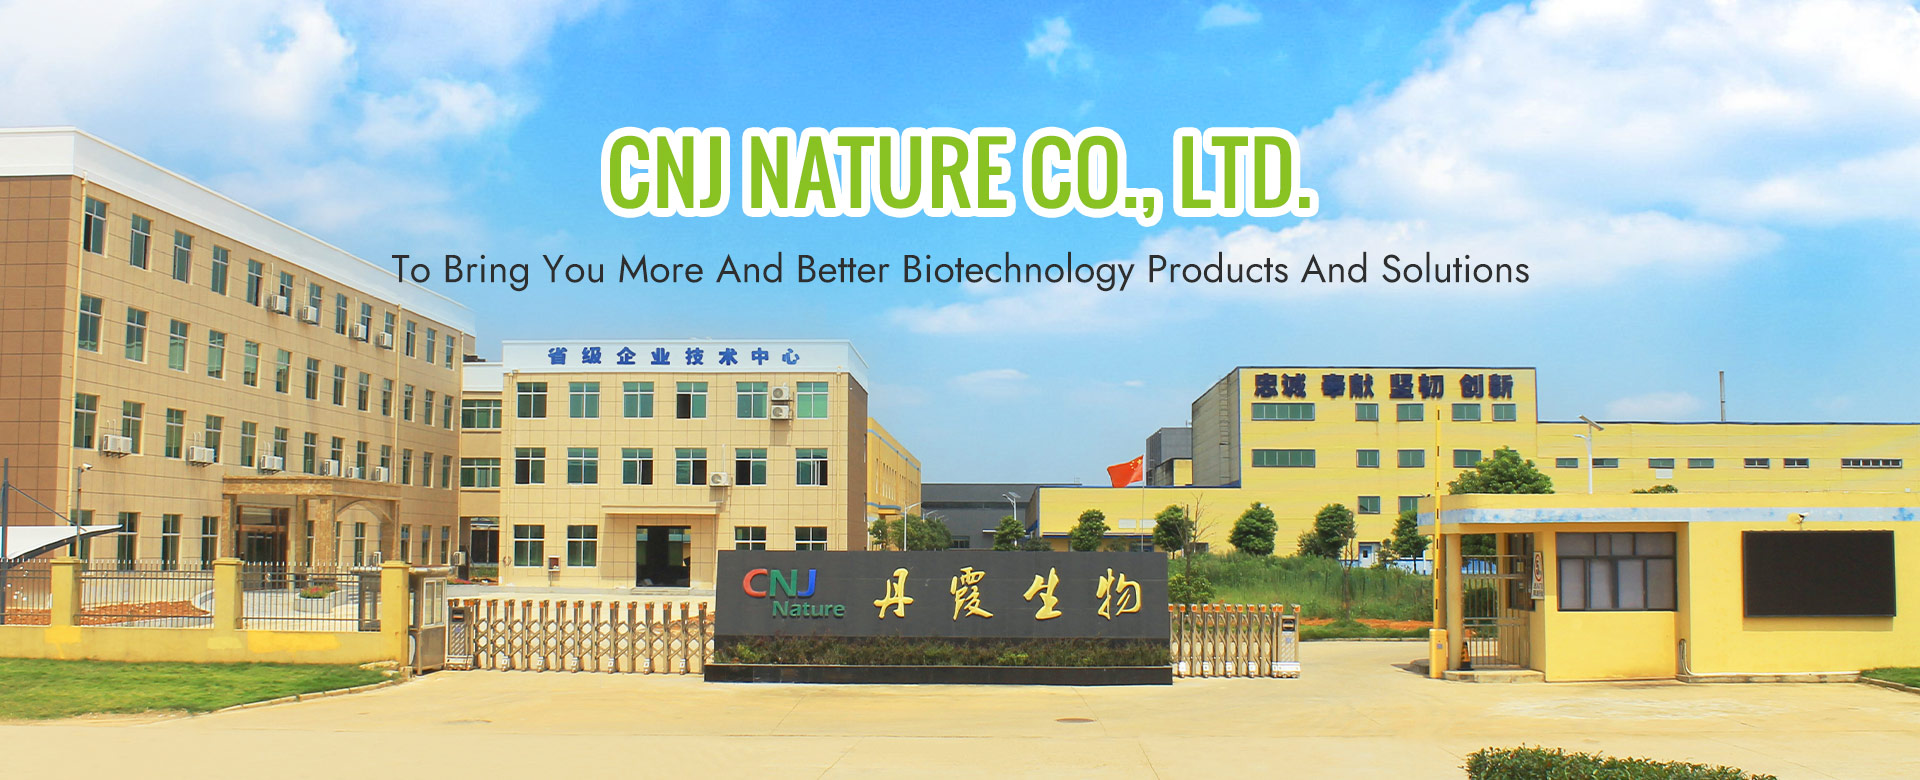 CNJ Nature Co., Ltd.